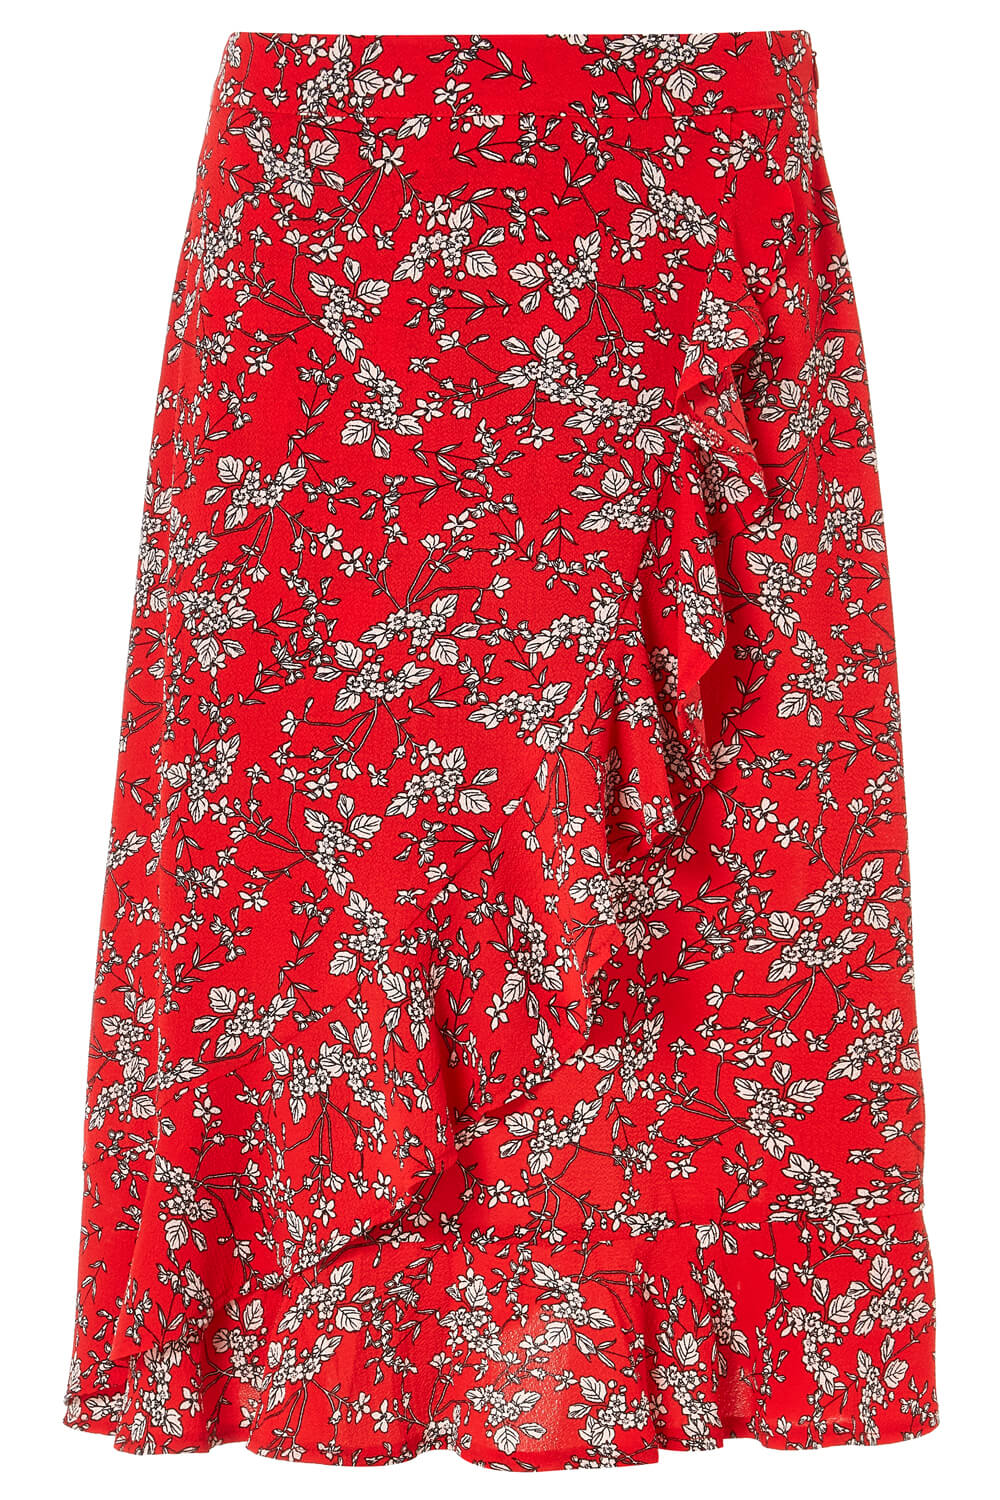 Ditsy Floral Ruffle Detail Skirt in Red - Roman Originals UK